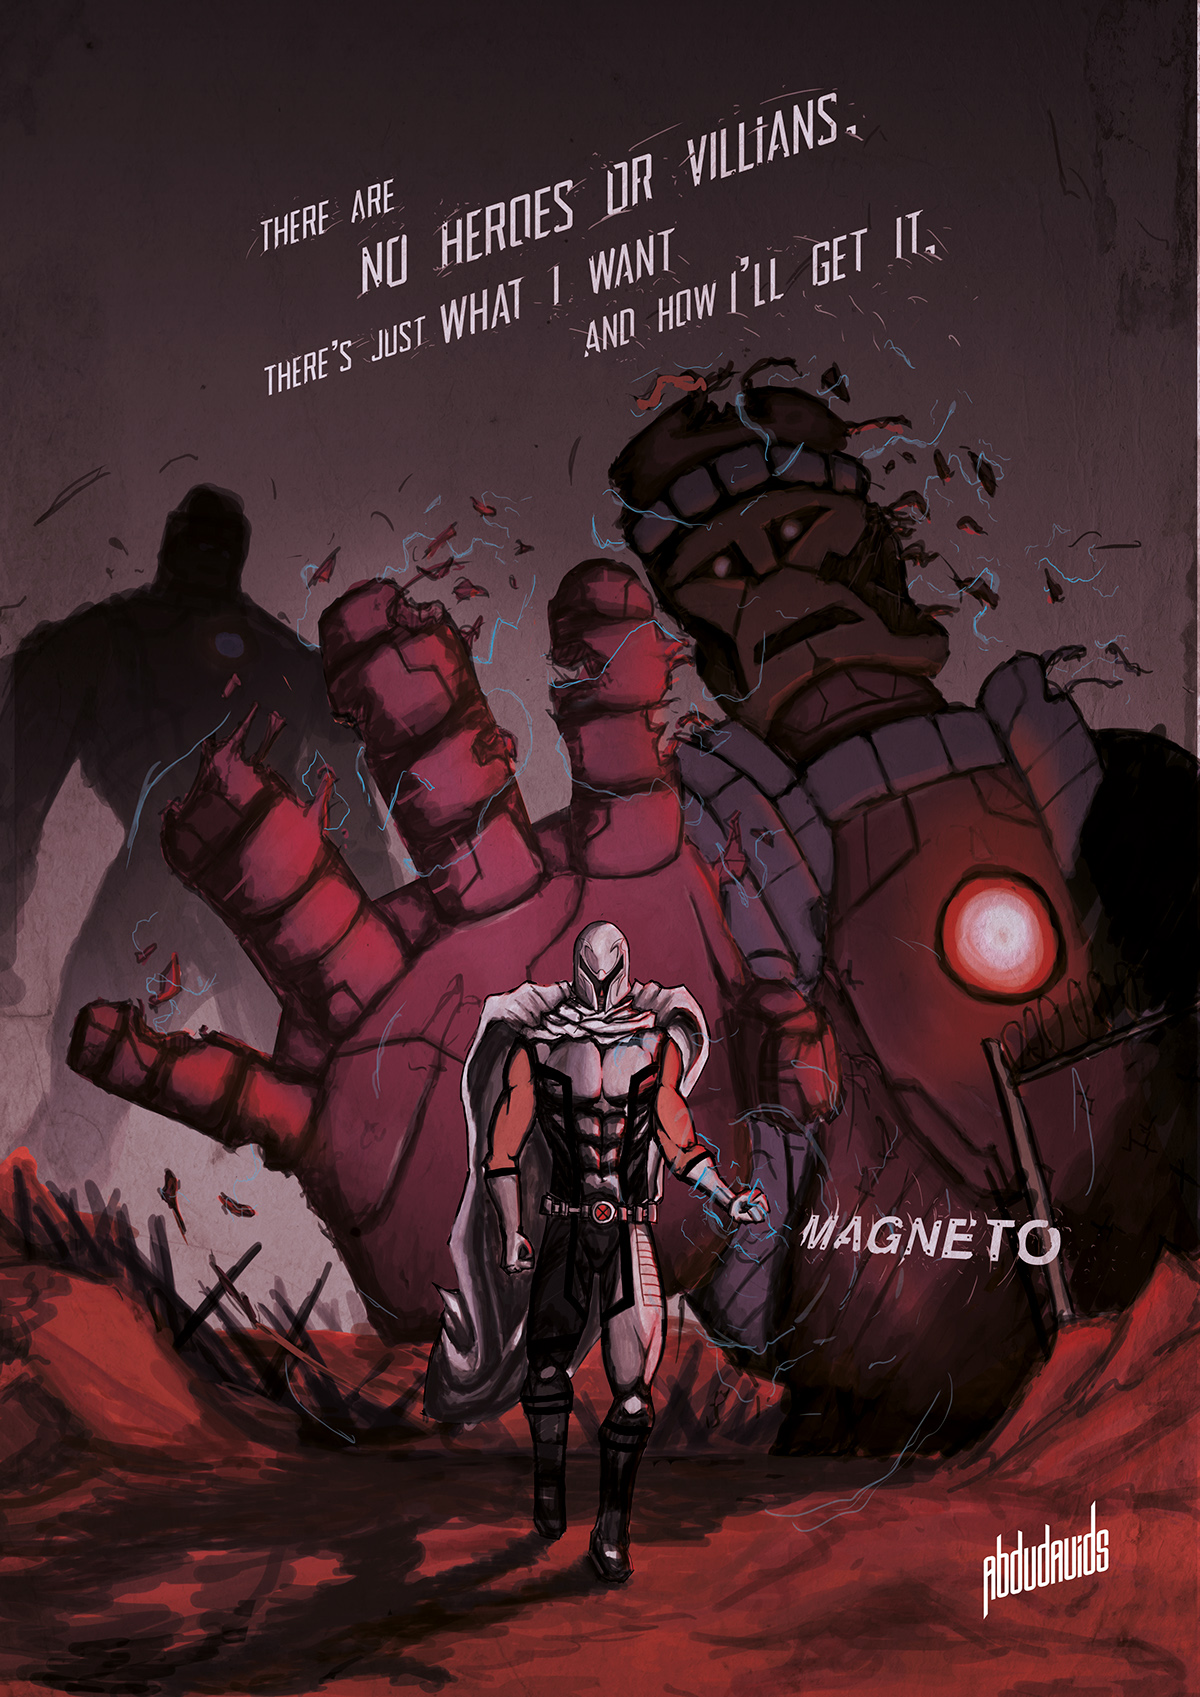 x-men wolverine cyclops magneto colossus Superheros heros villains type Quotes poster